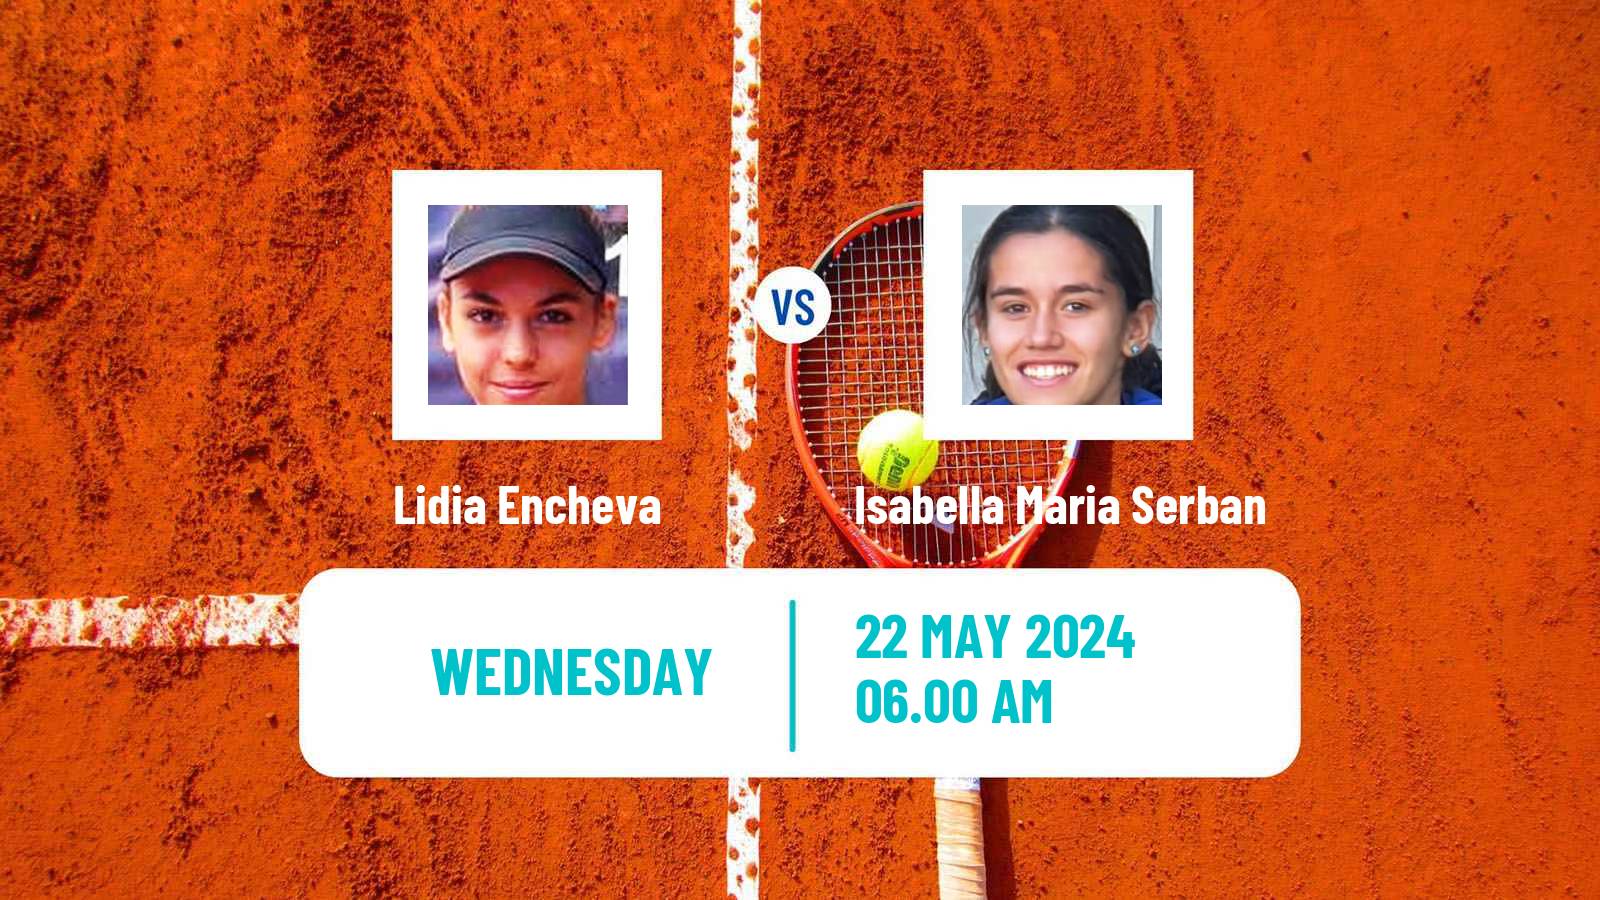 Tennis ITF W15 Bucharest 2 Women Lidia Encheva - Isabella Maria Serban